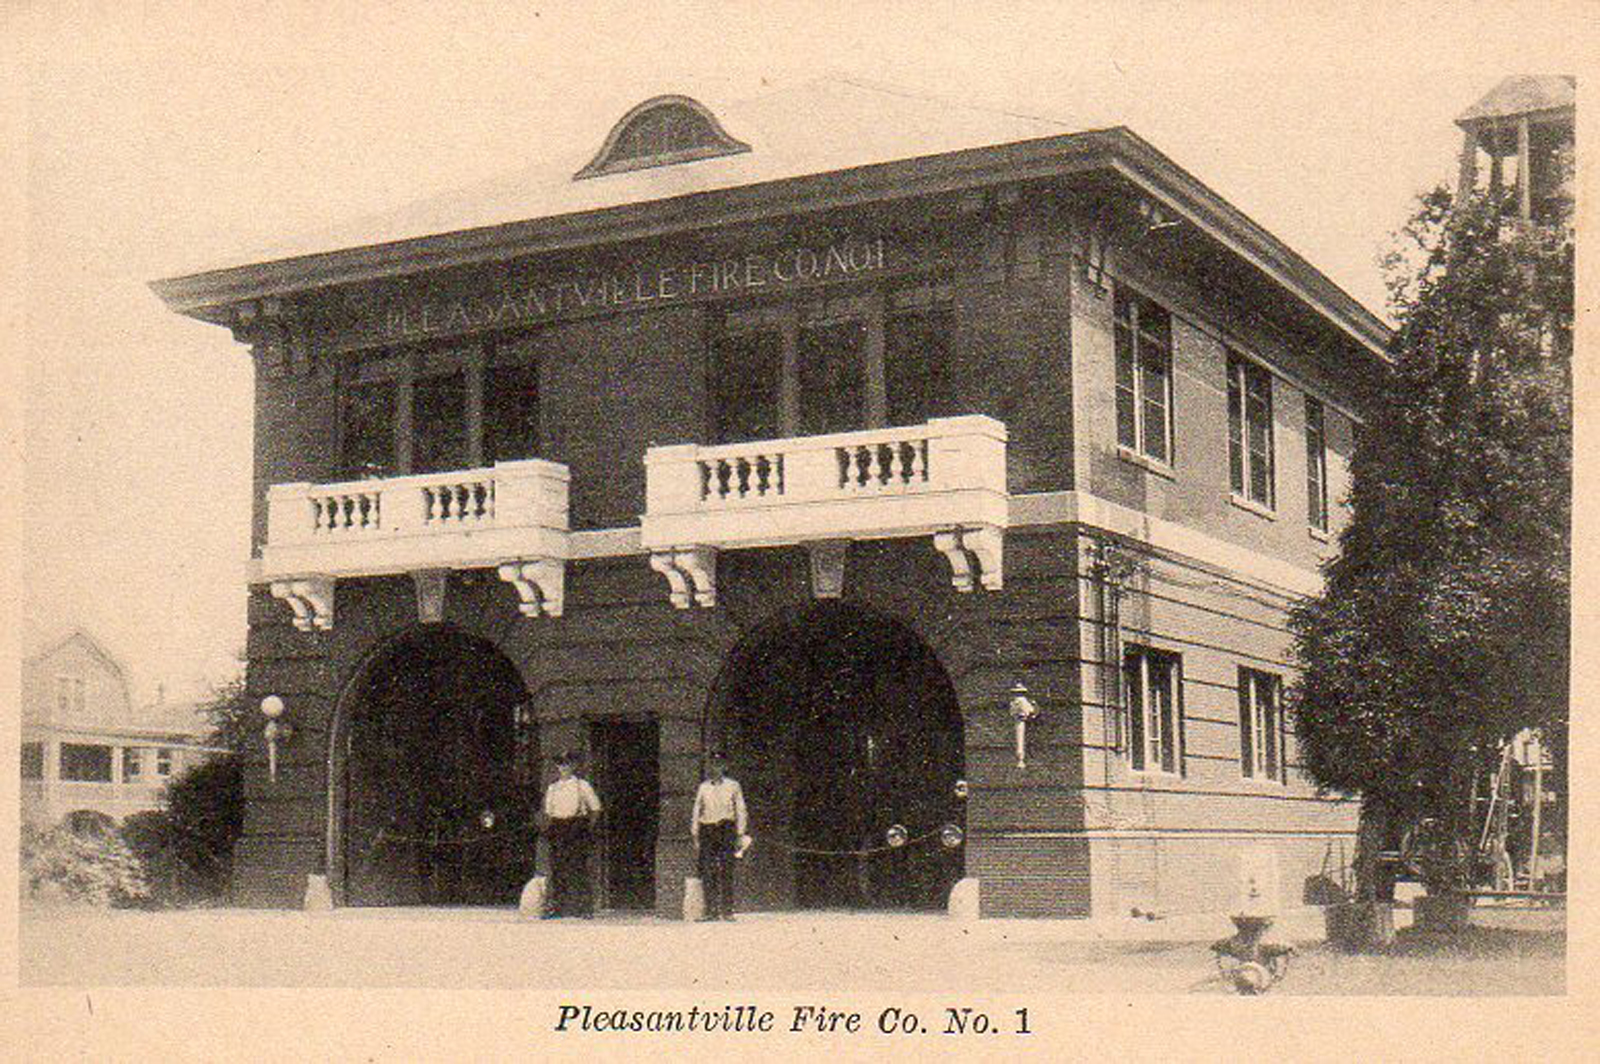 Pleasantville - Pleasantville Fire Company Number 1 - 1910s-20s